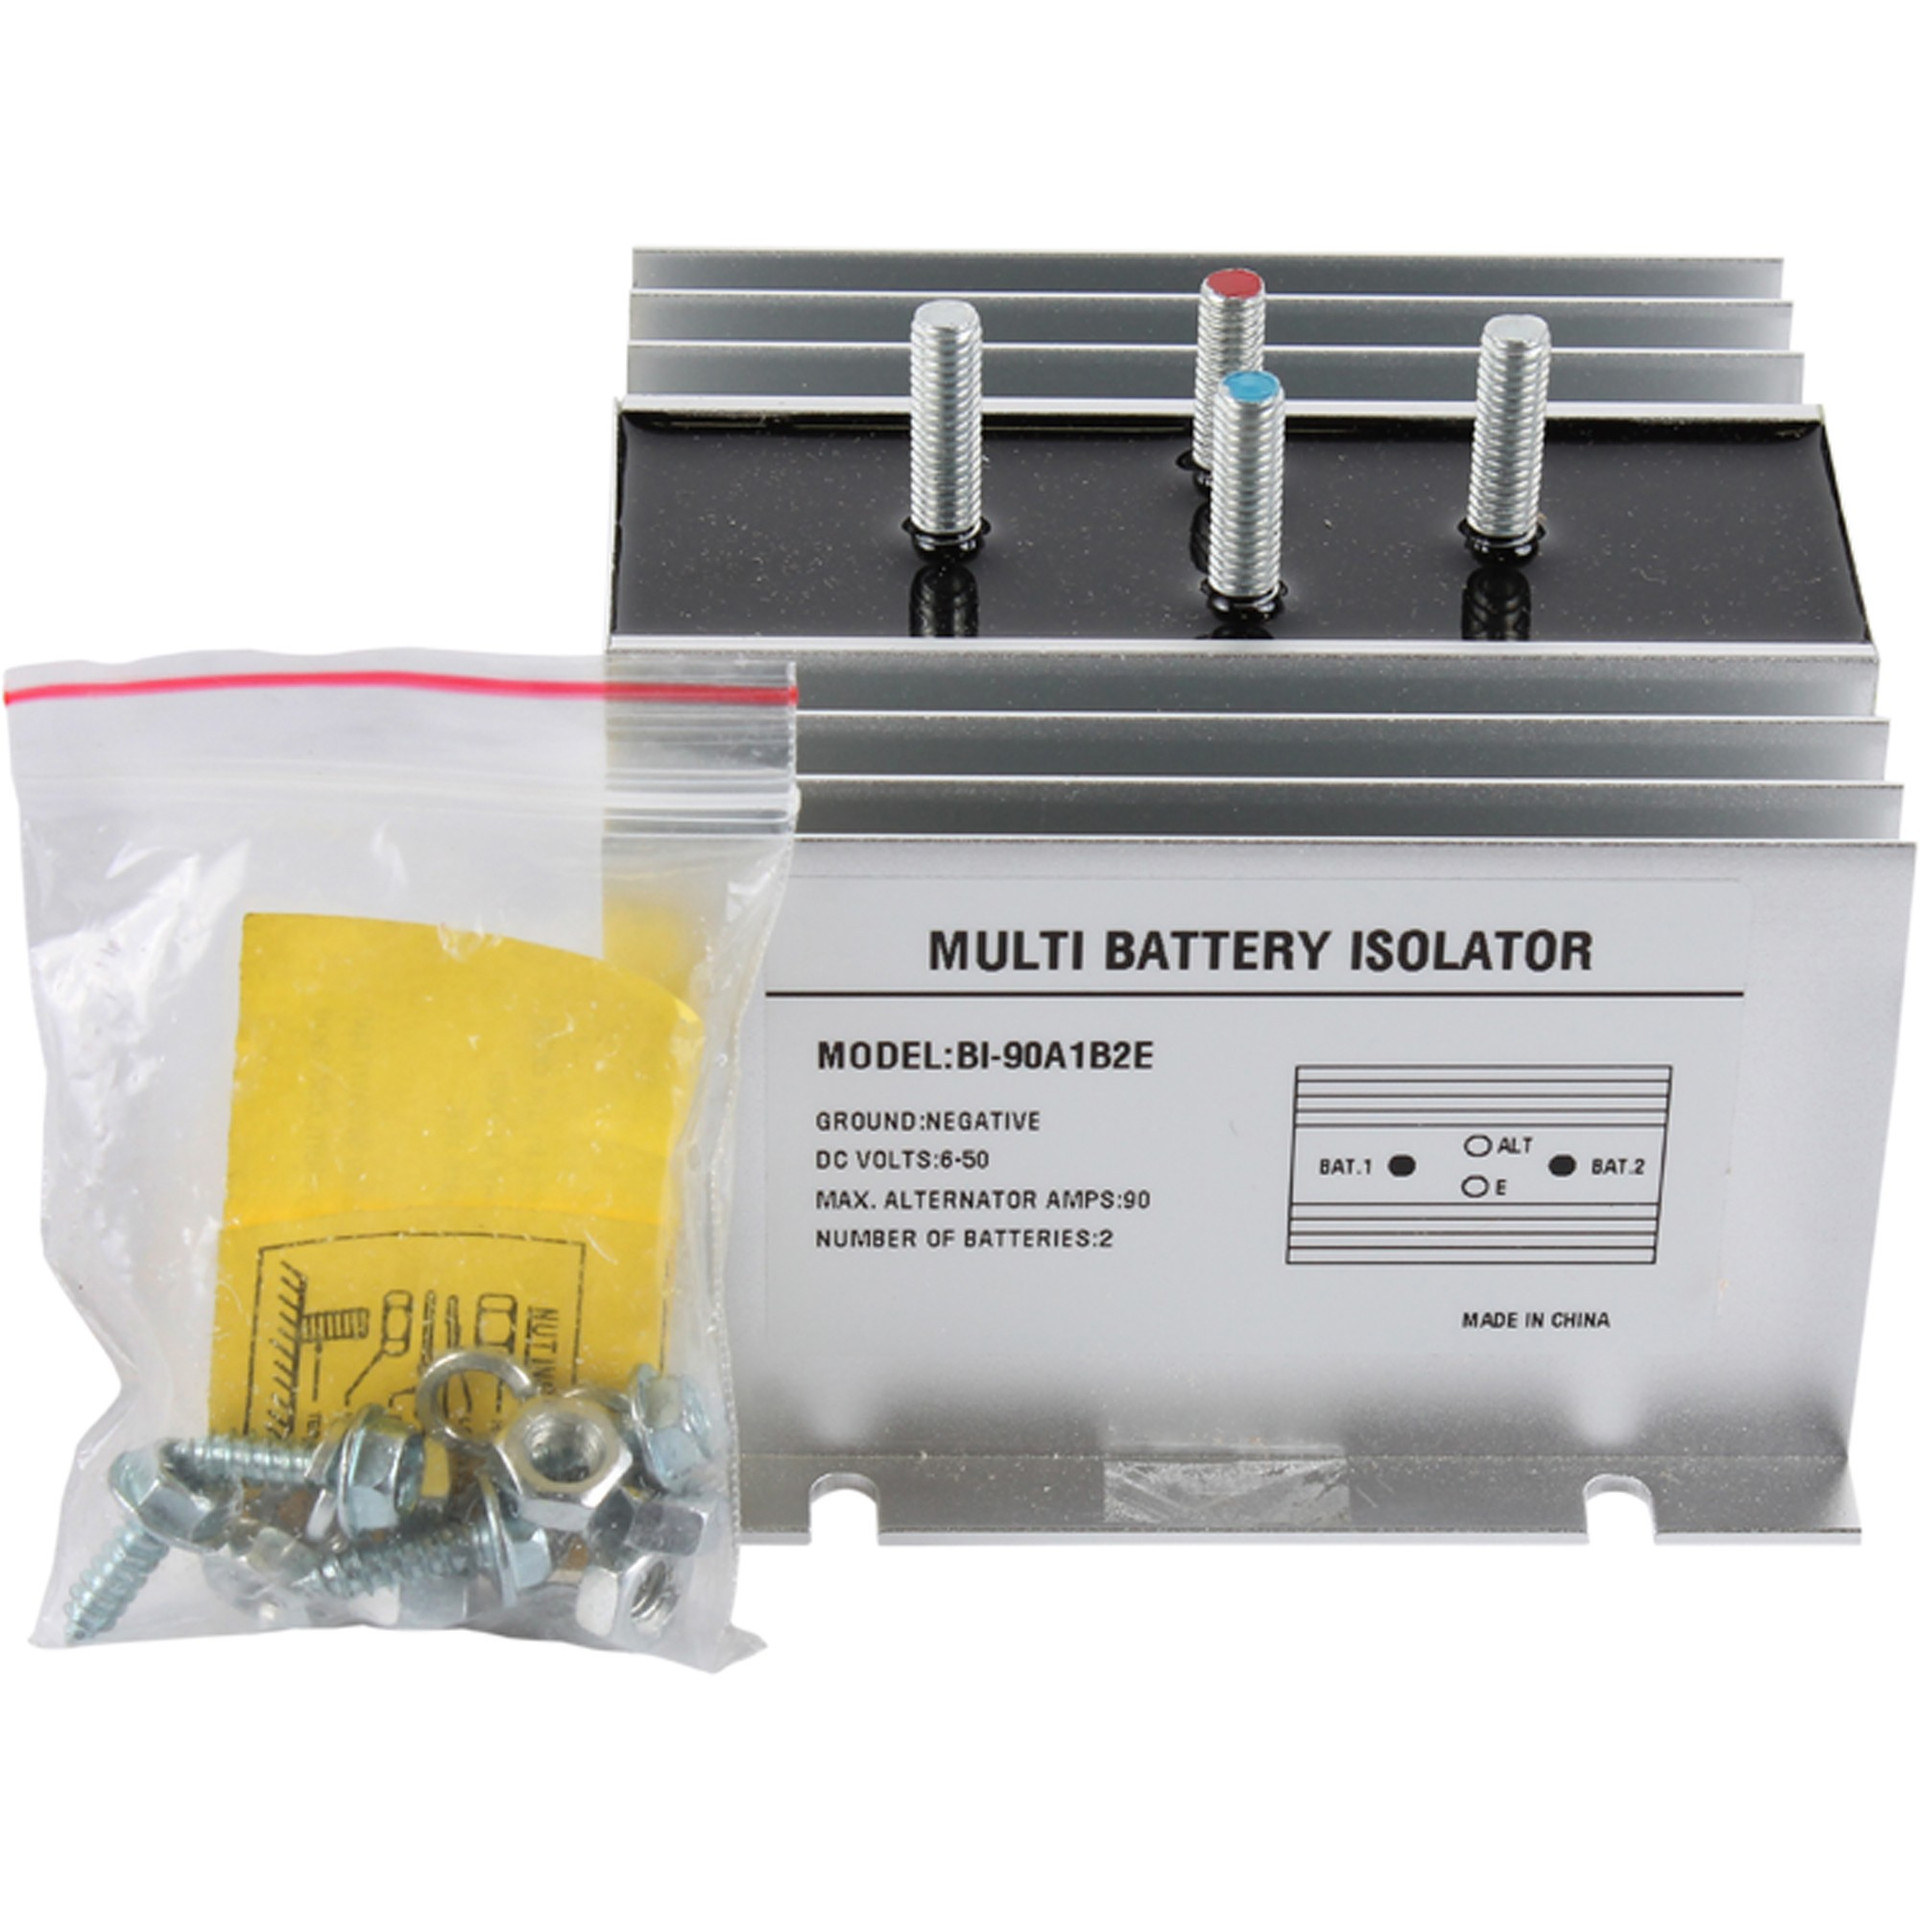 1203 multi battery isolator